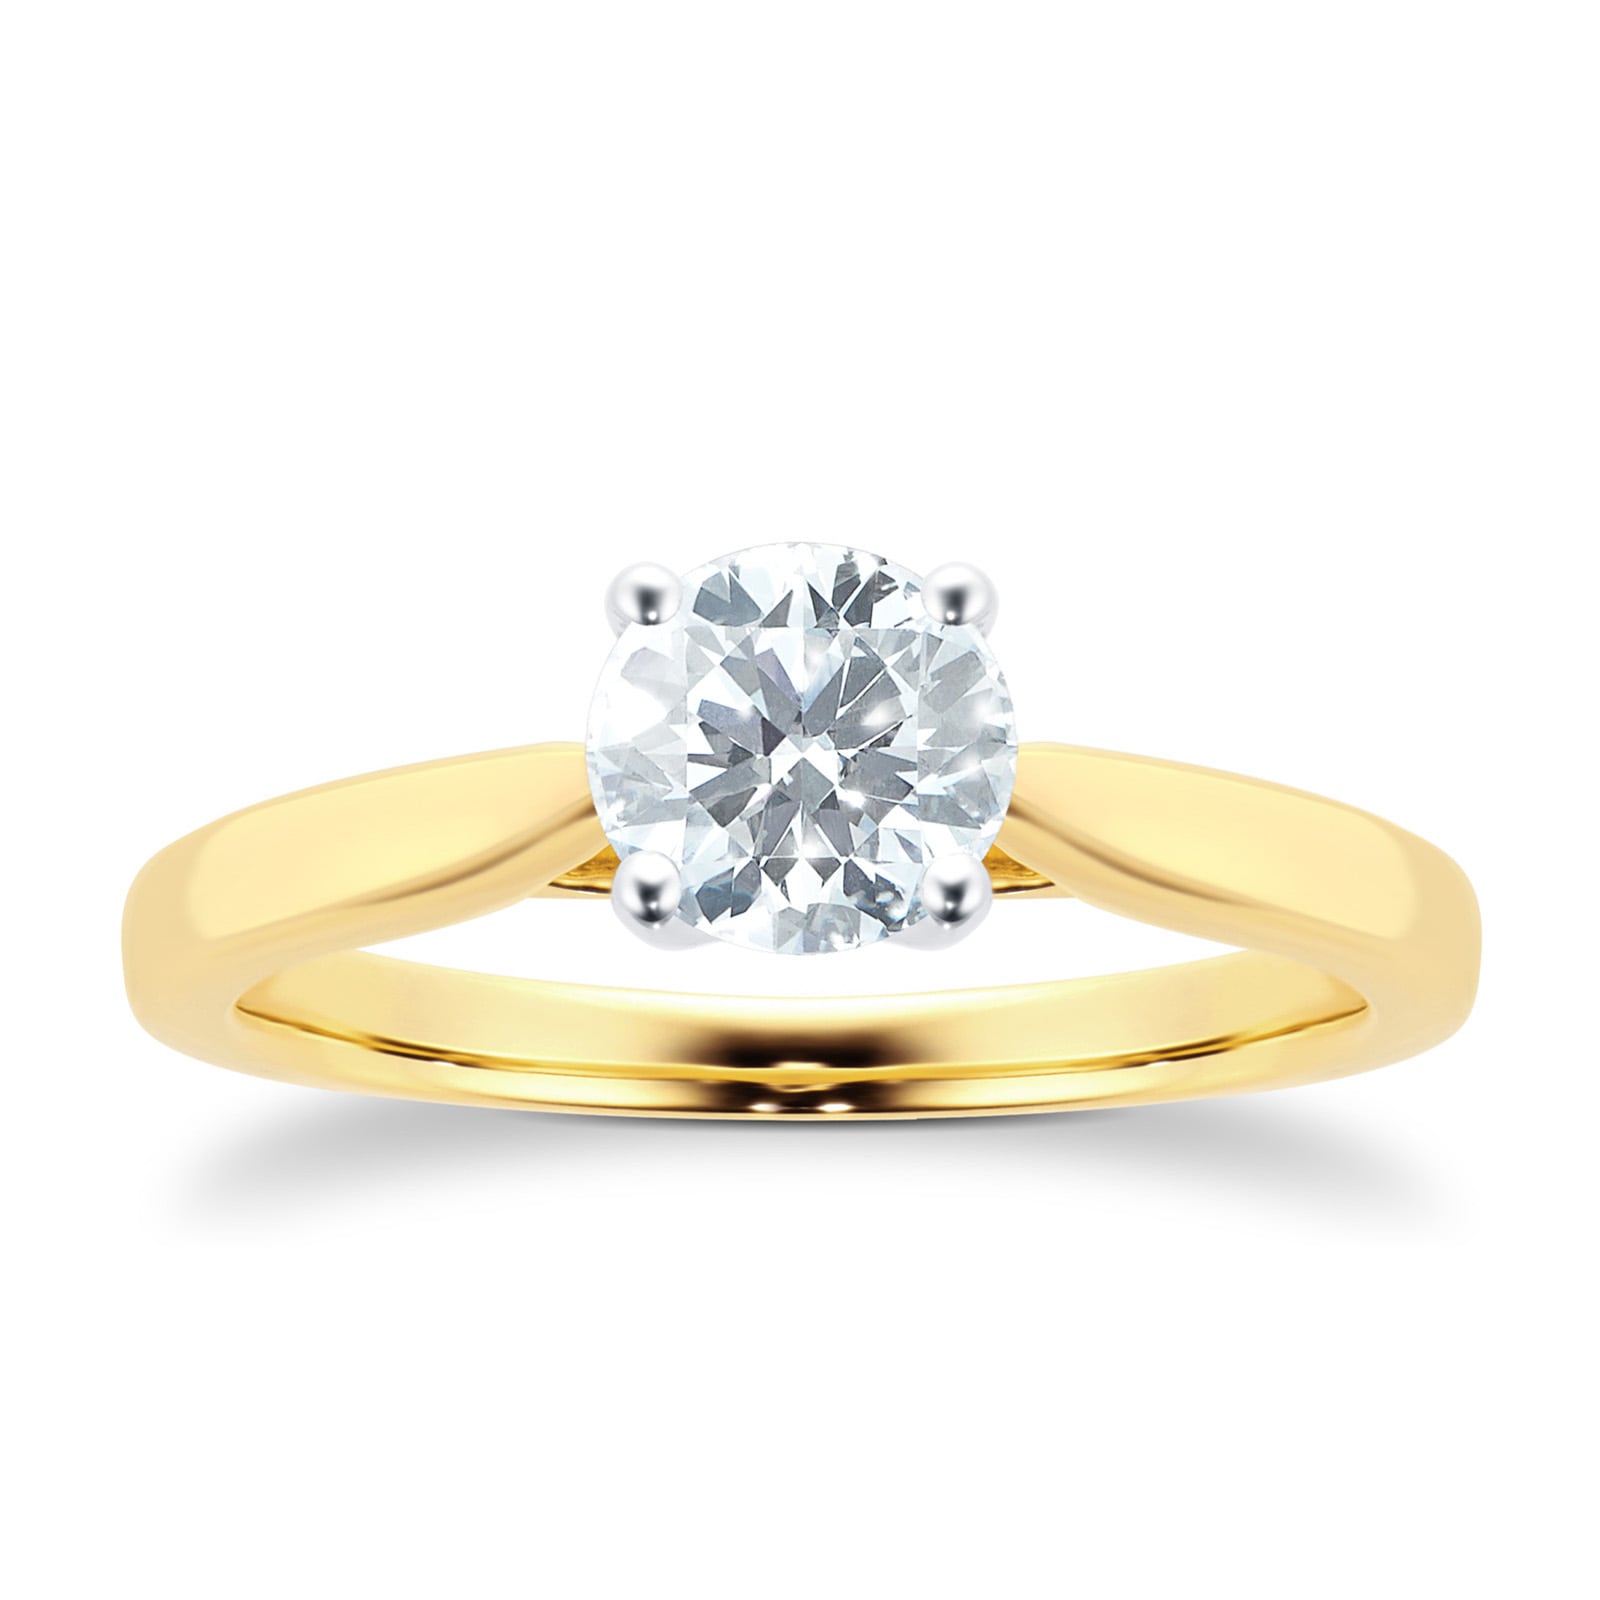 18ct Yellow Gold Brilliant Cut 0.70 Carat 88 Facet Diamond Ring - Ring Size M.5